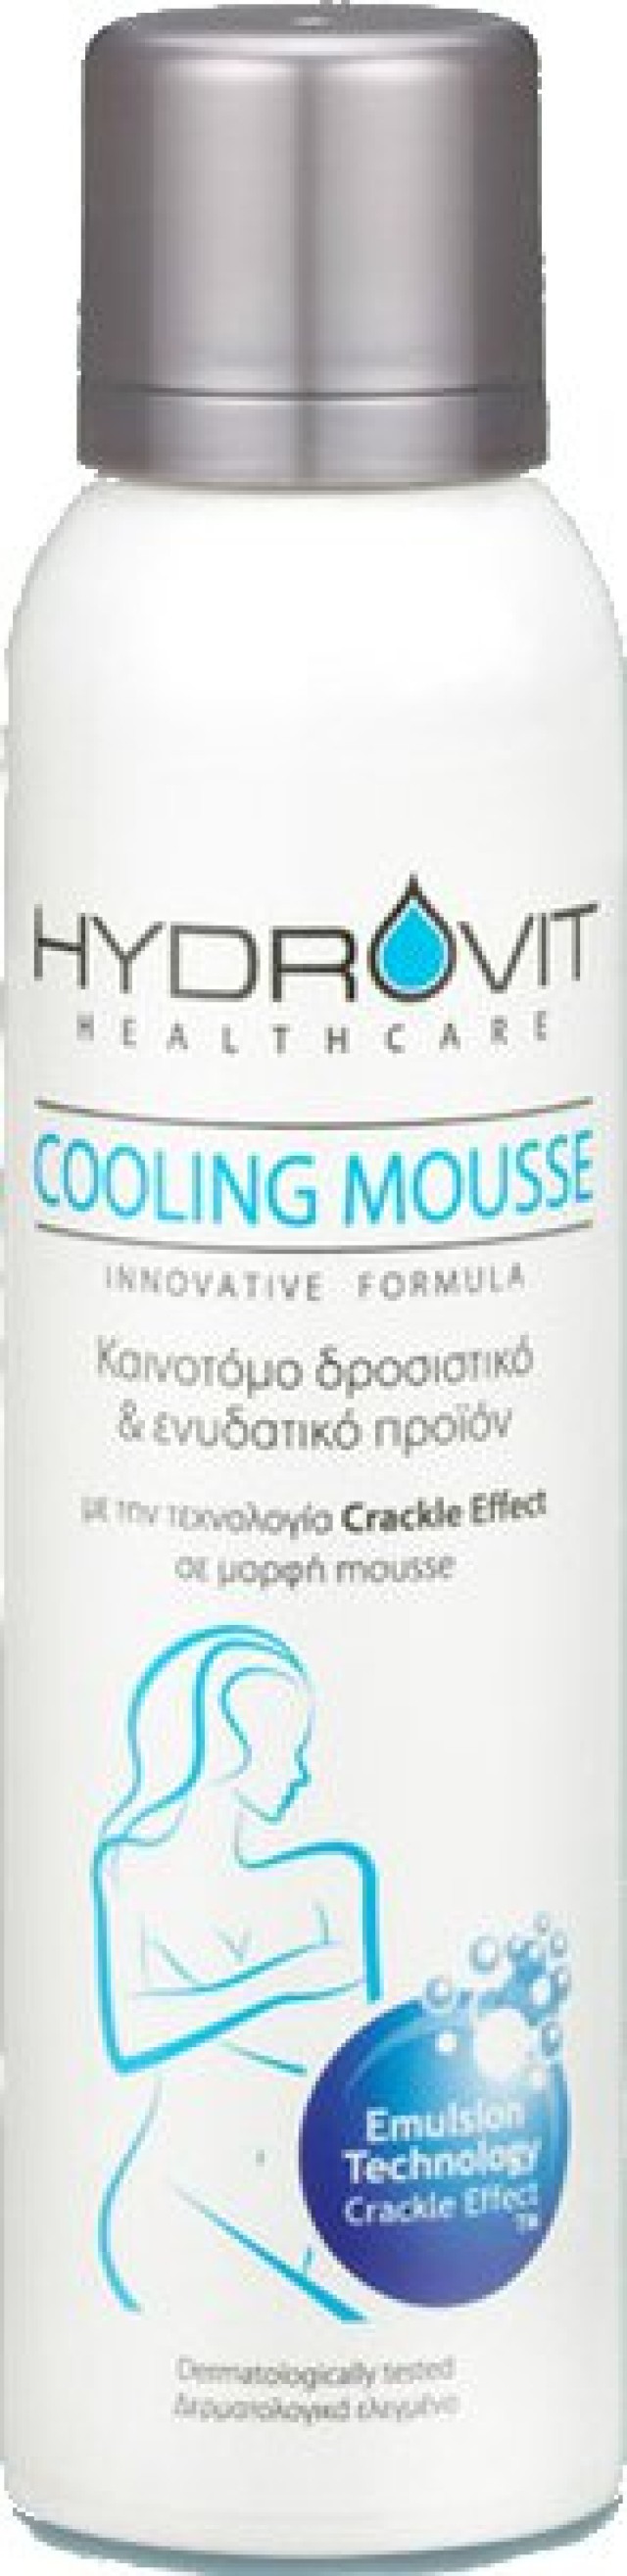 Hydrovit Cooling Mousse Καινοτόμο Δροσιστικό - Ενυδατικό Mousse, 150 ml